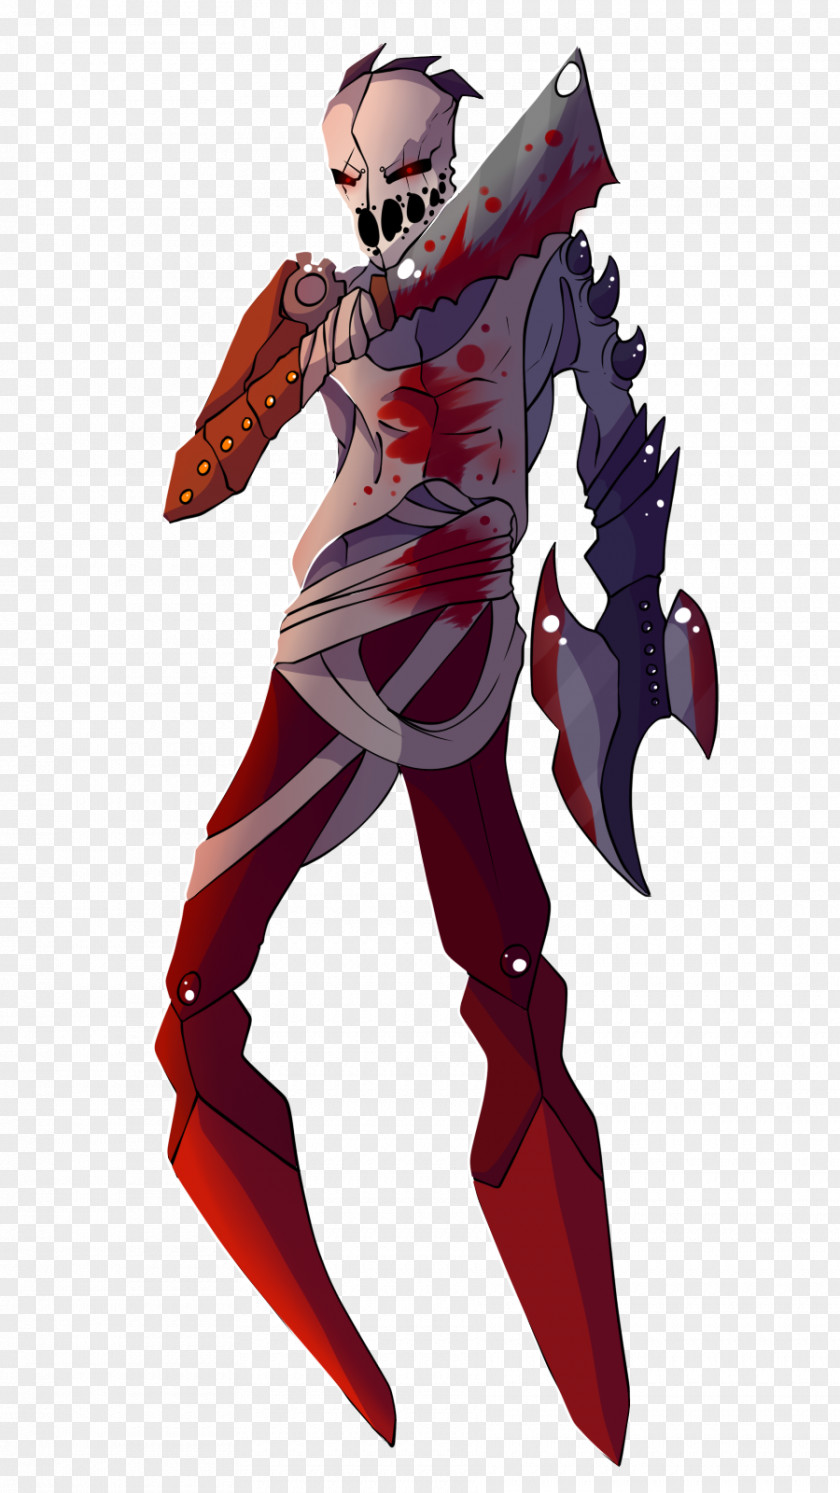 Bloodstained Bandage Costume Design Superhero PNG